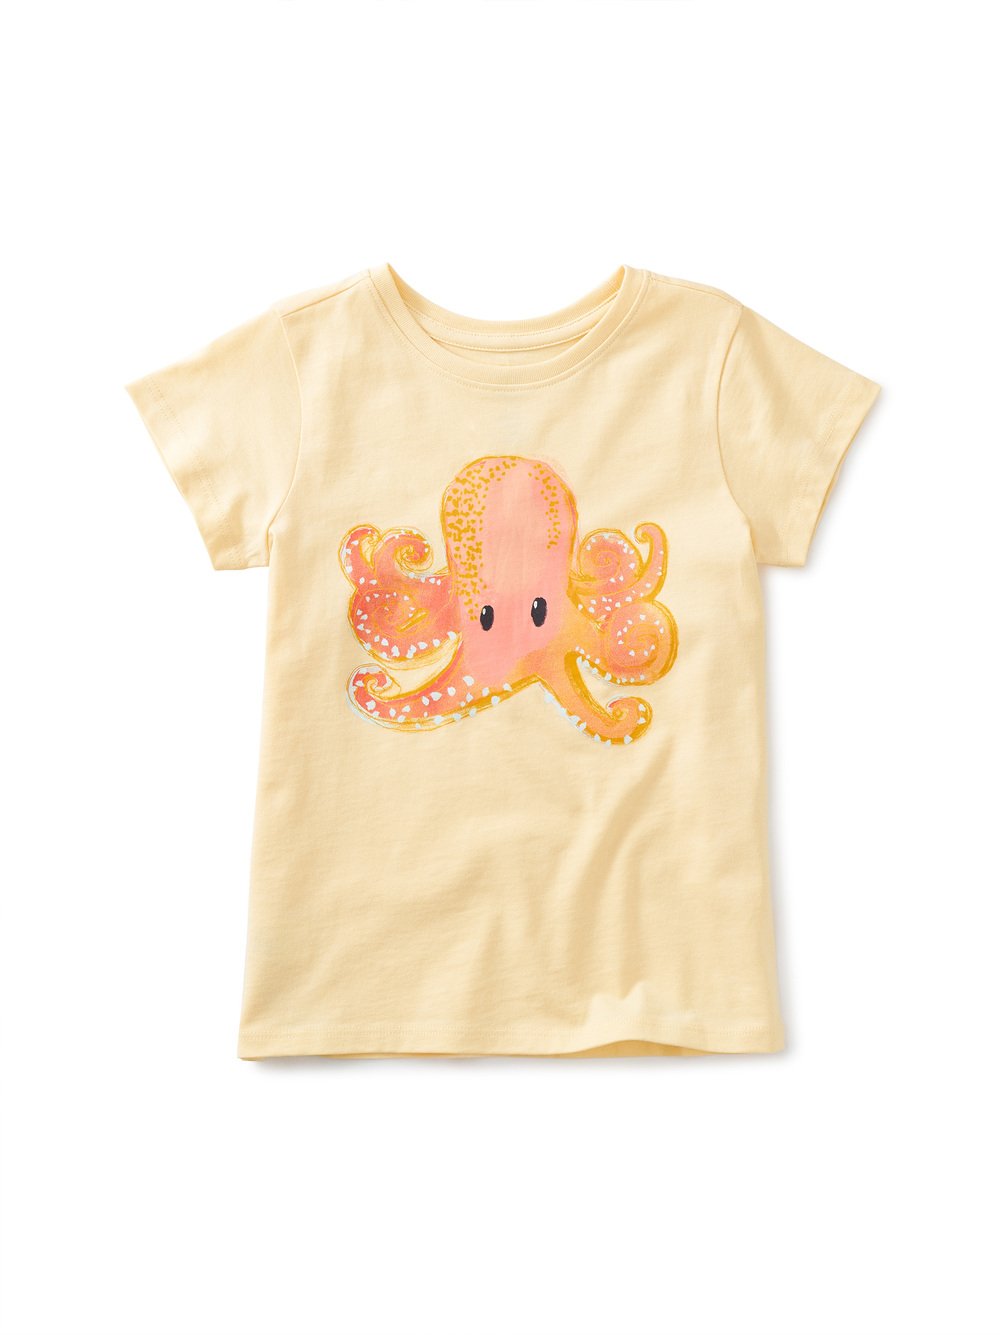 Inky Octopus Graphic Tee